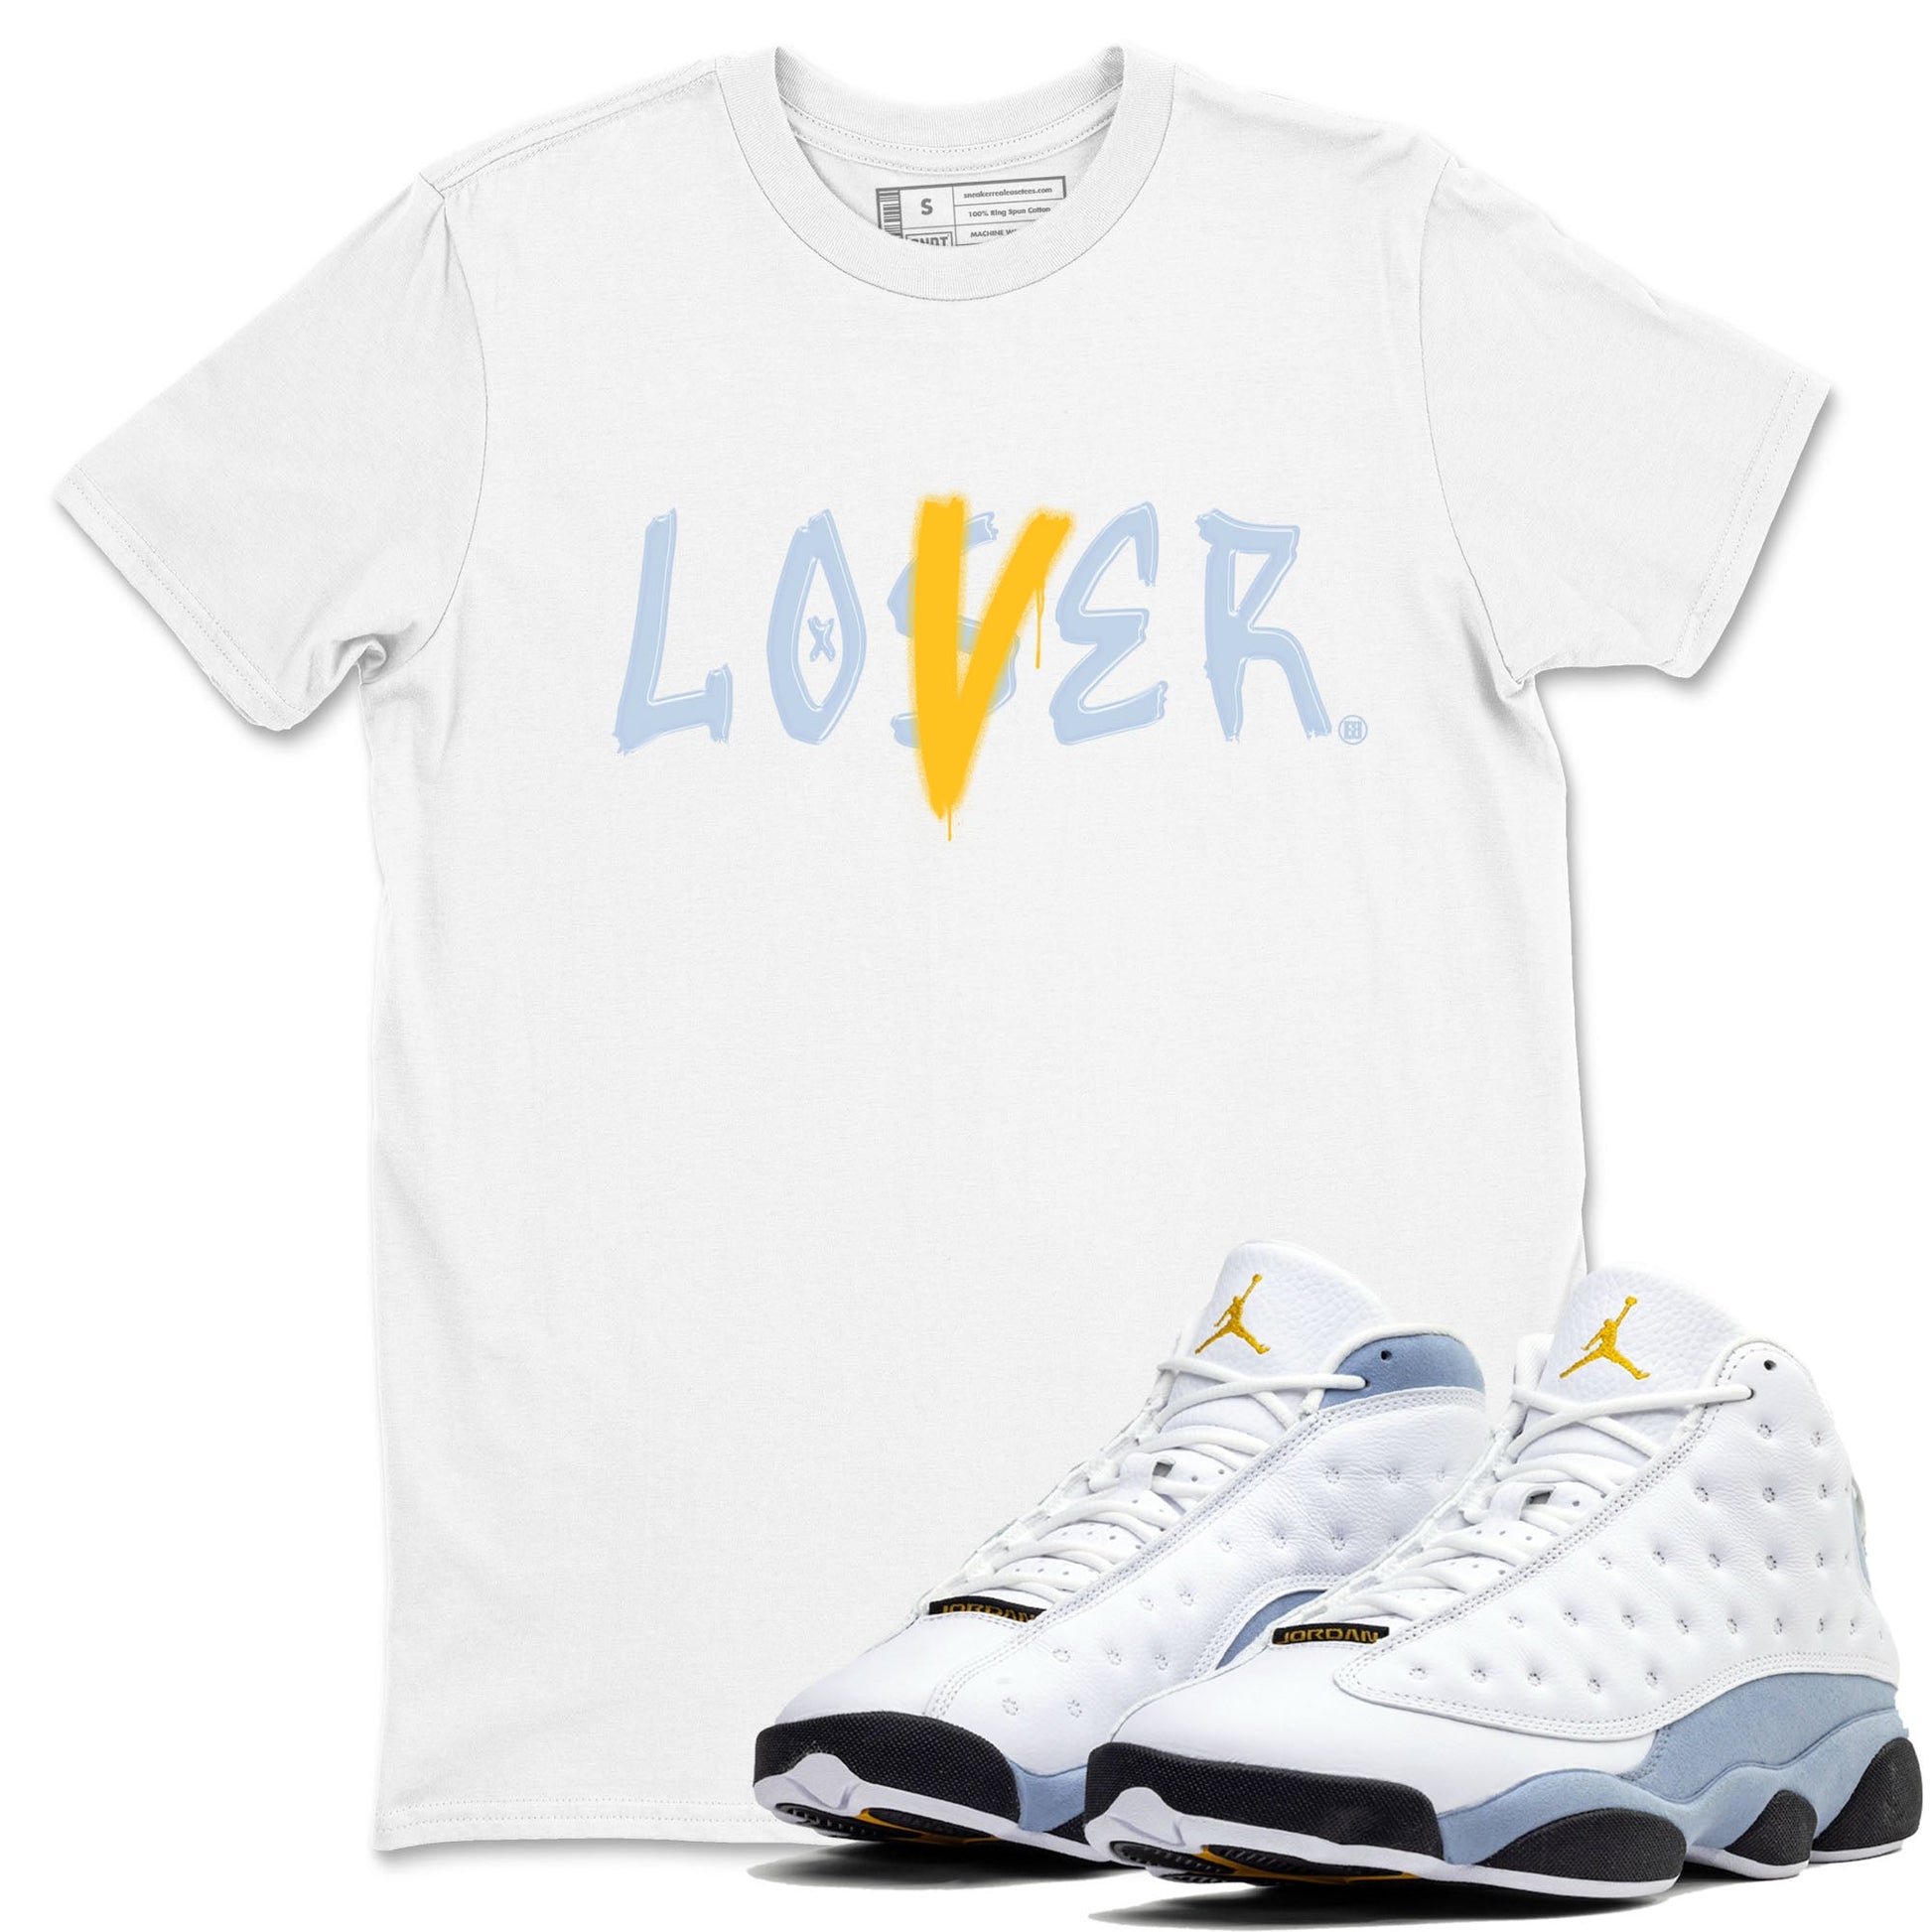 13s Blue Grey shirt to match jordans Loser Lover sneaker tees Air Jordan 13 Retro Blue Grey SNRT Sneaker Release Tees unisex cotton White 1 crew neck shirt